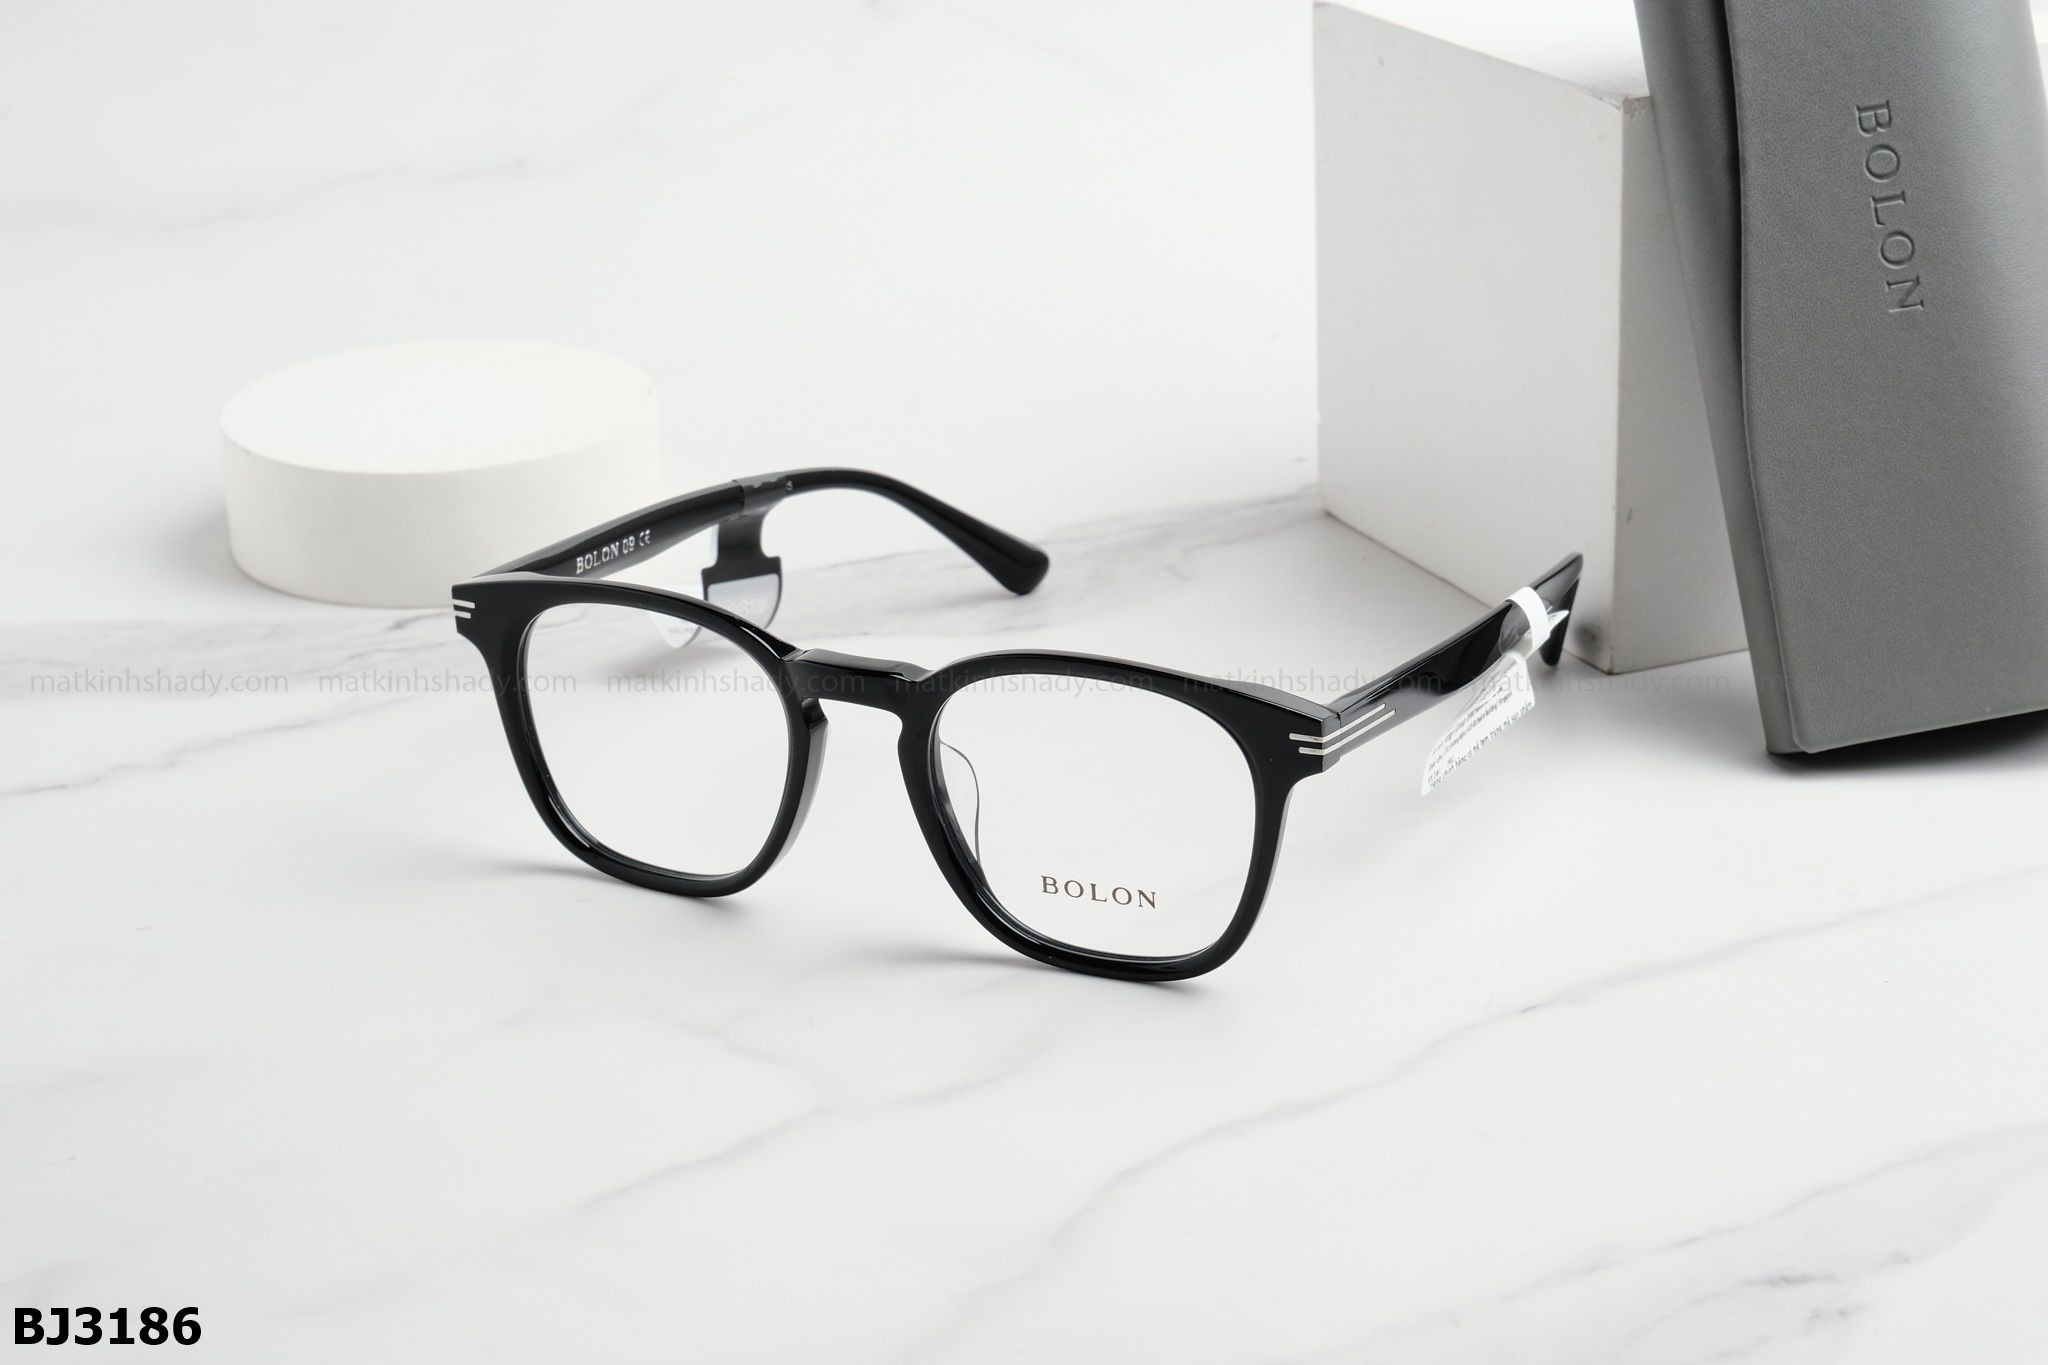  Bolon Eyewear - Glasses - BJ3186 